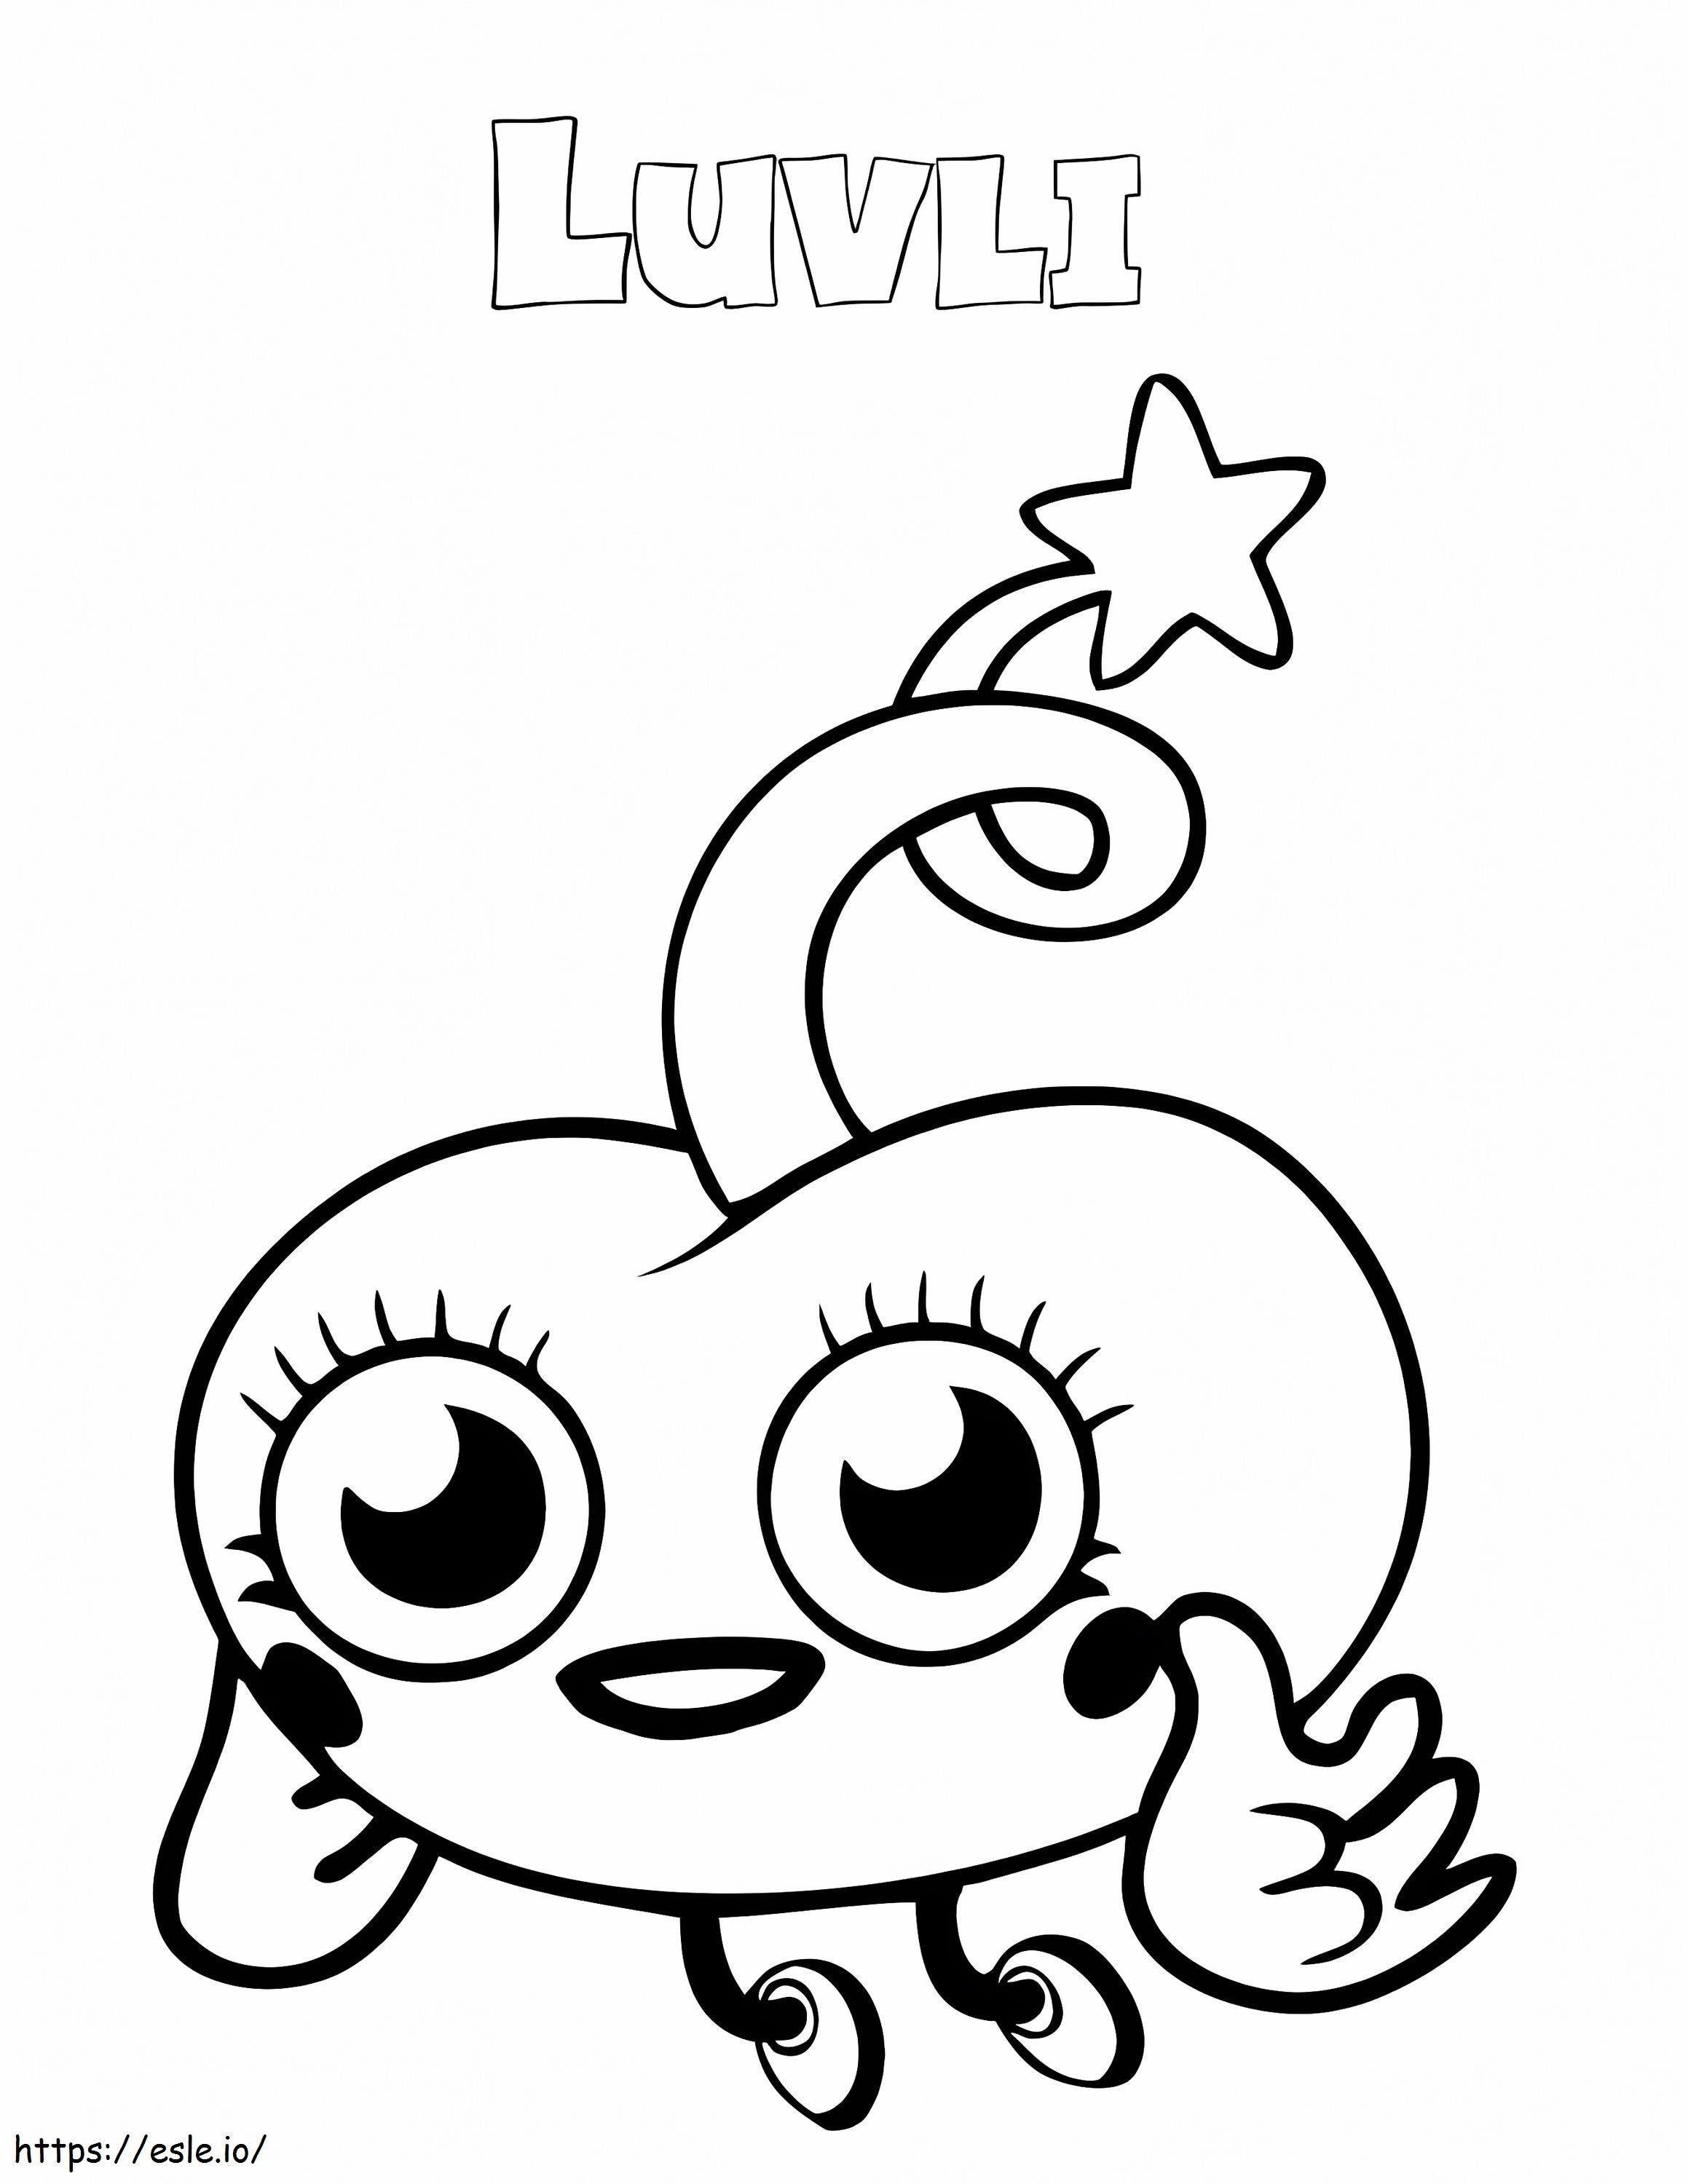 Luvli Moshi Monsters coloring page